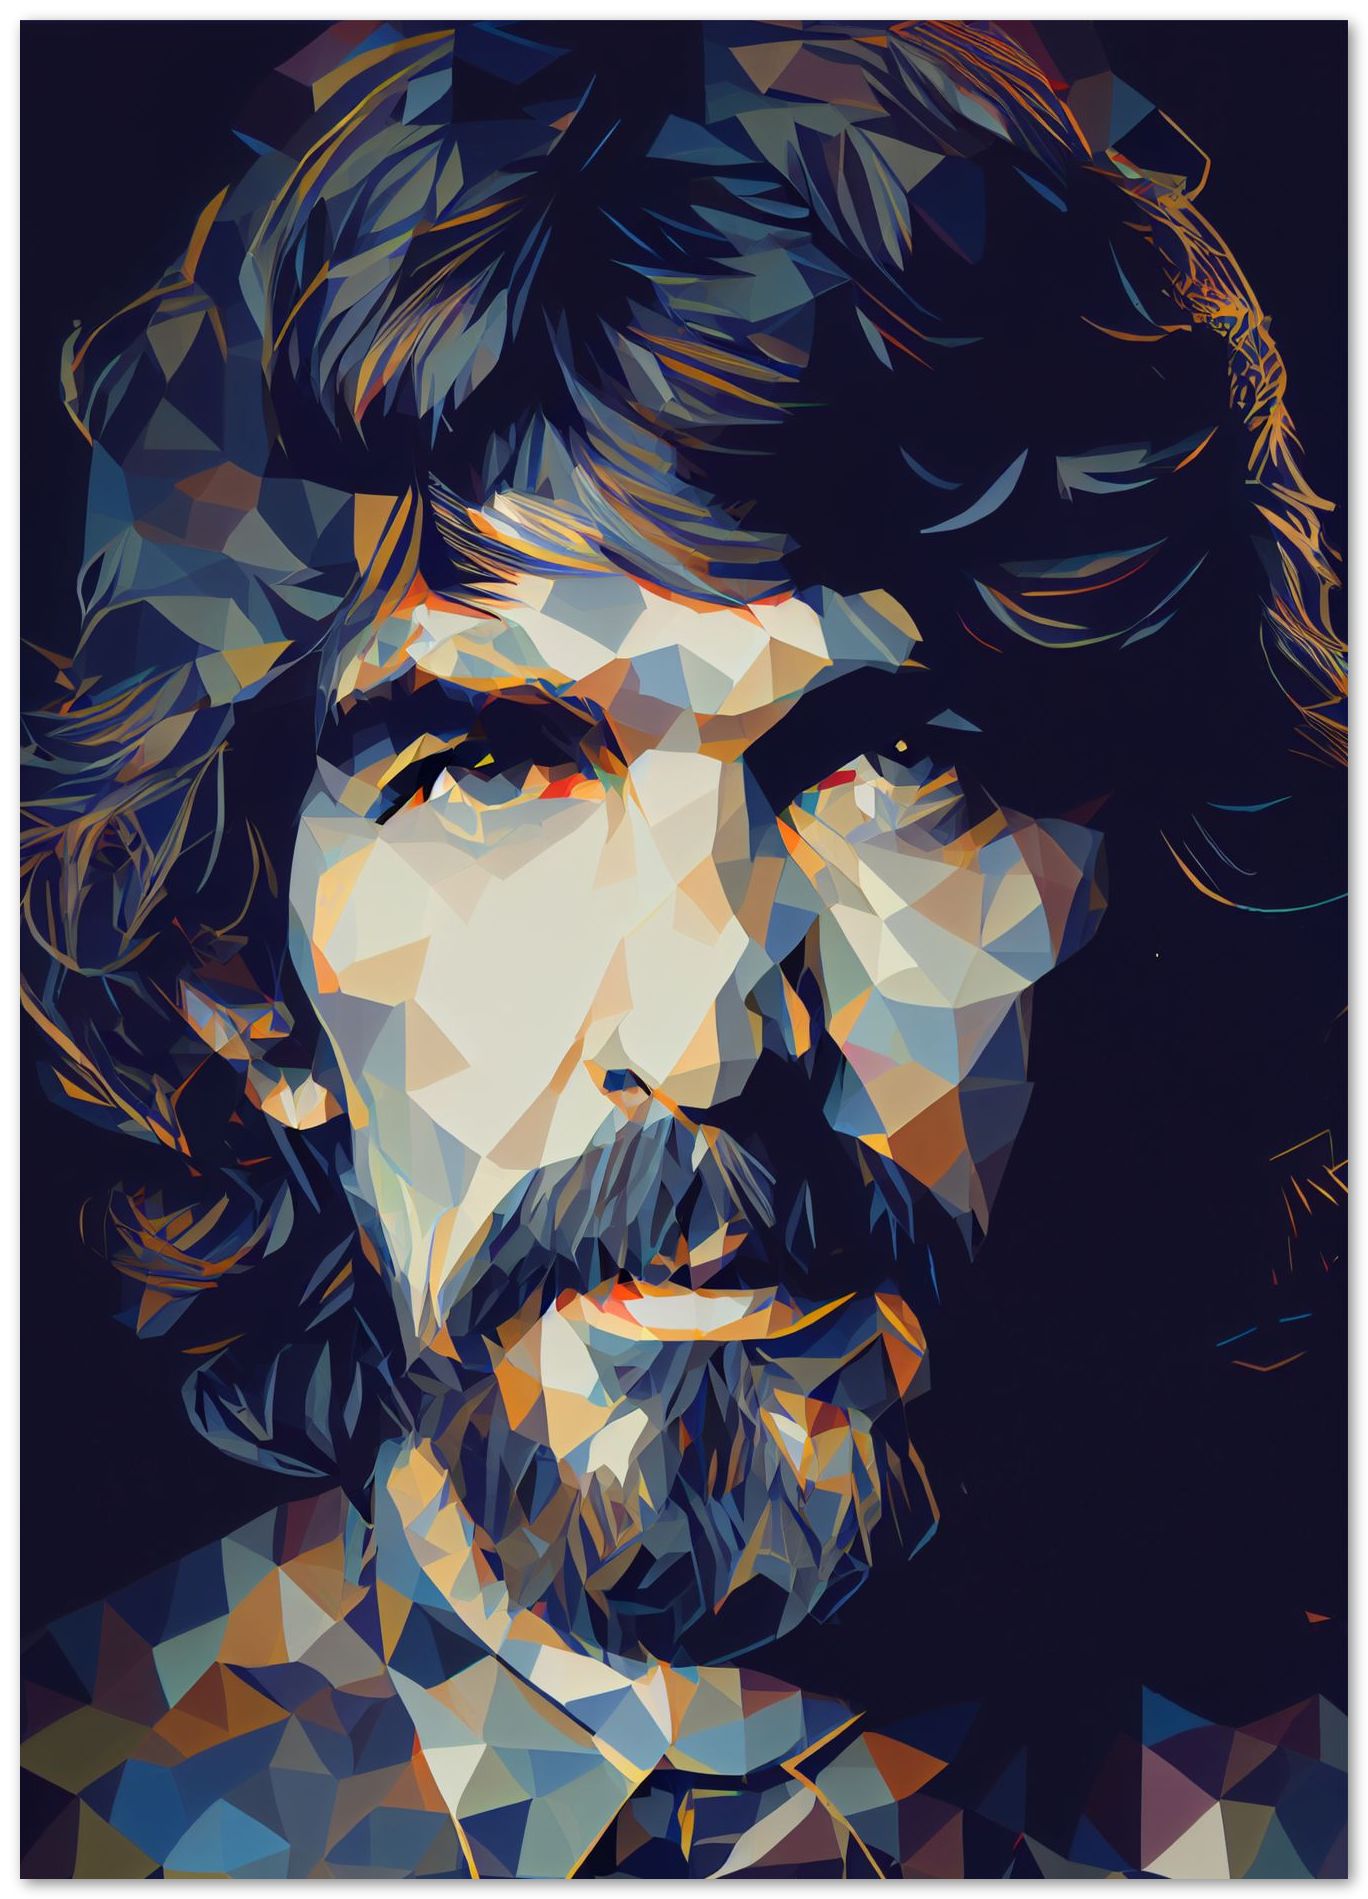 George Harrison Pop Art - @WpapArtist